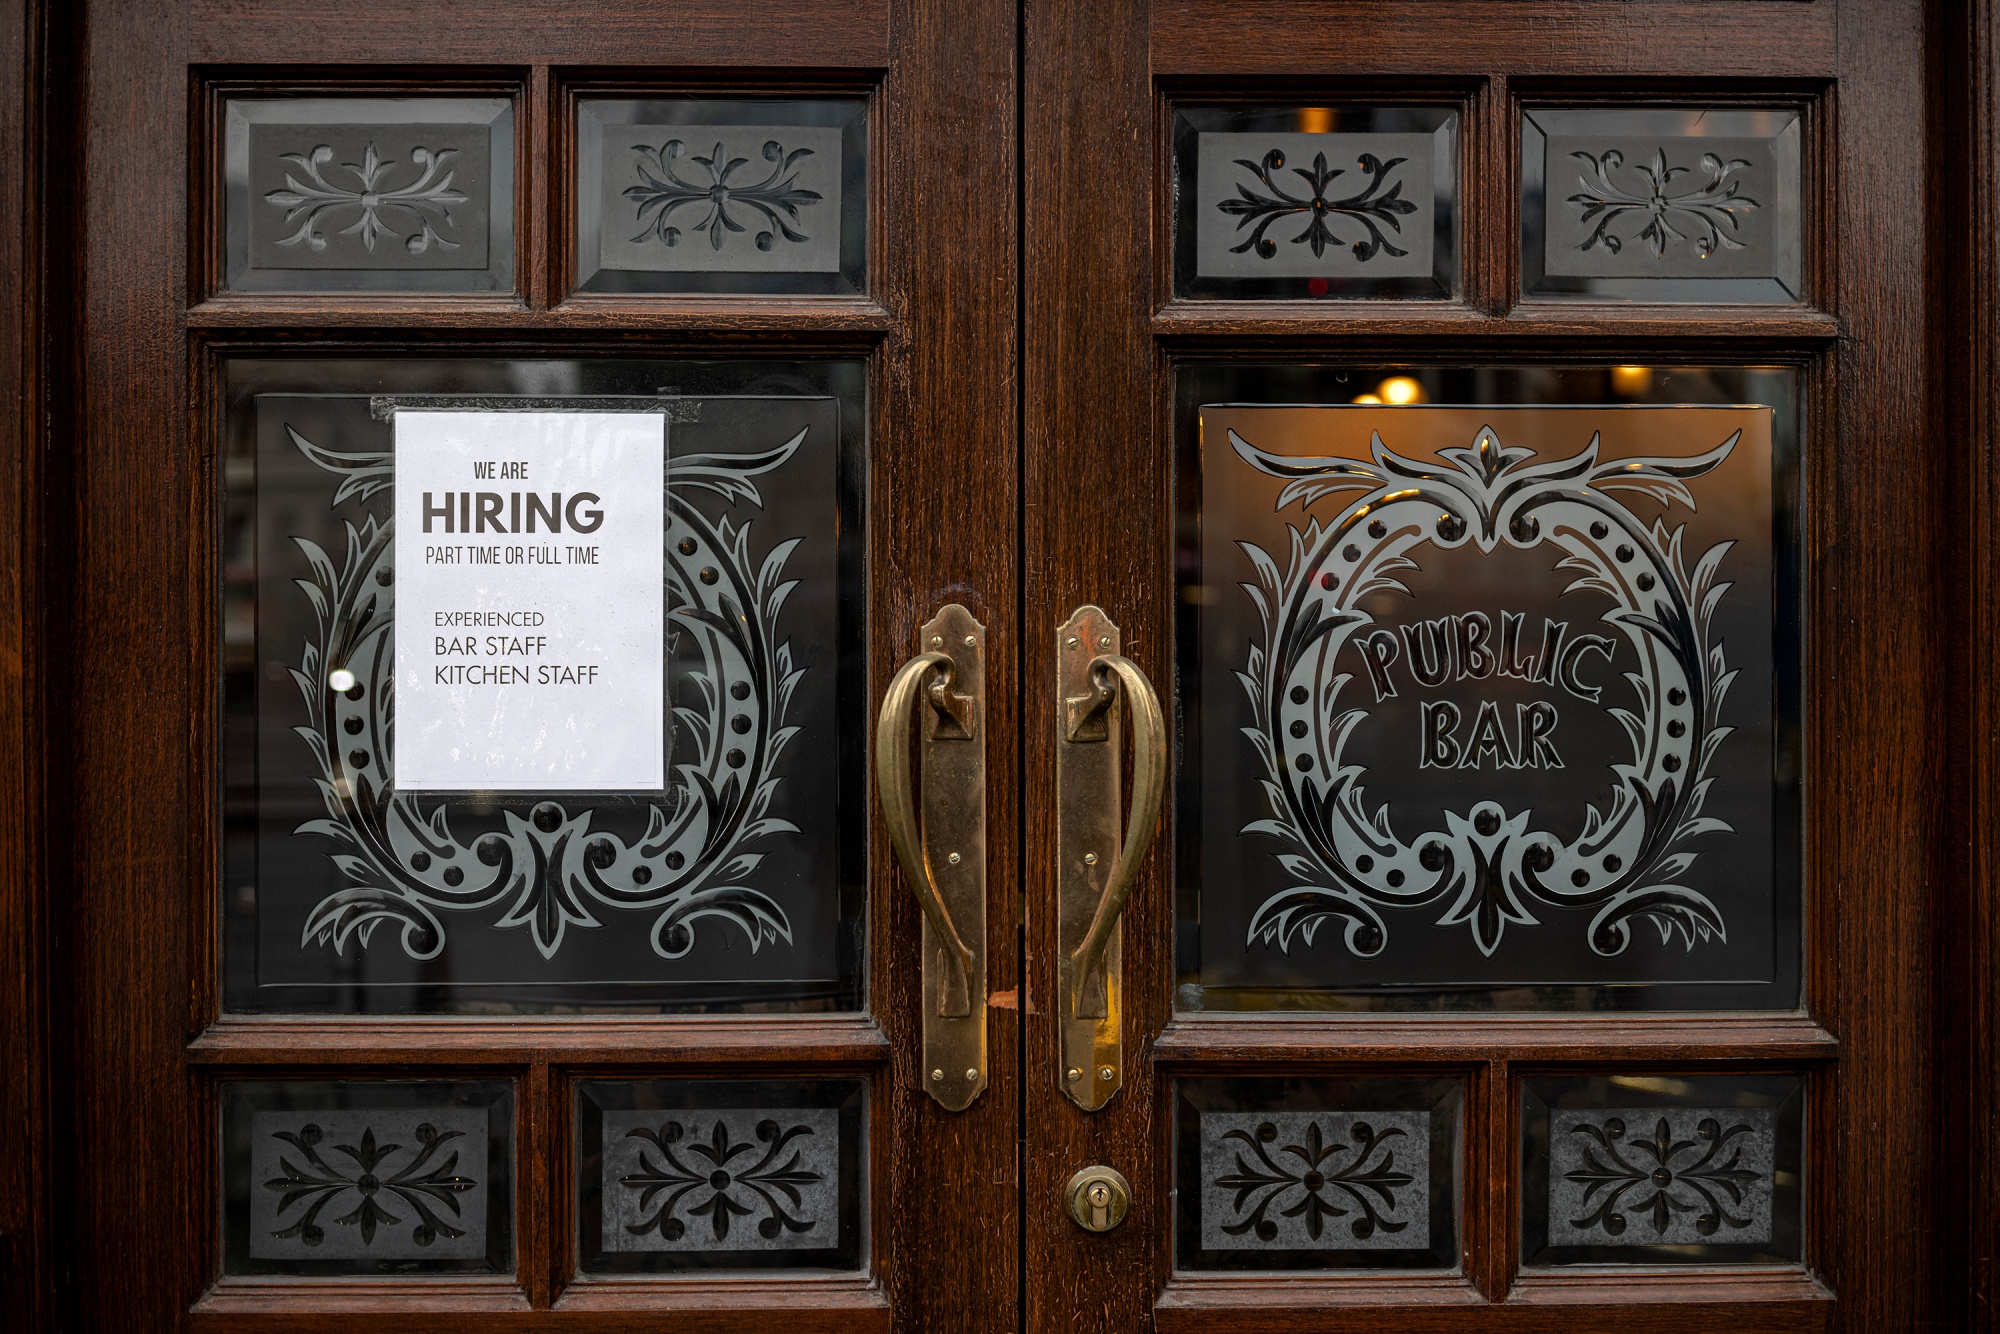 A job advert&nbsp;on a pub door in London.